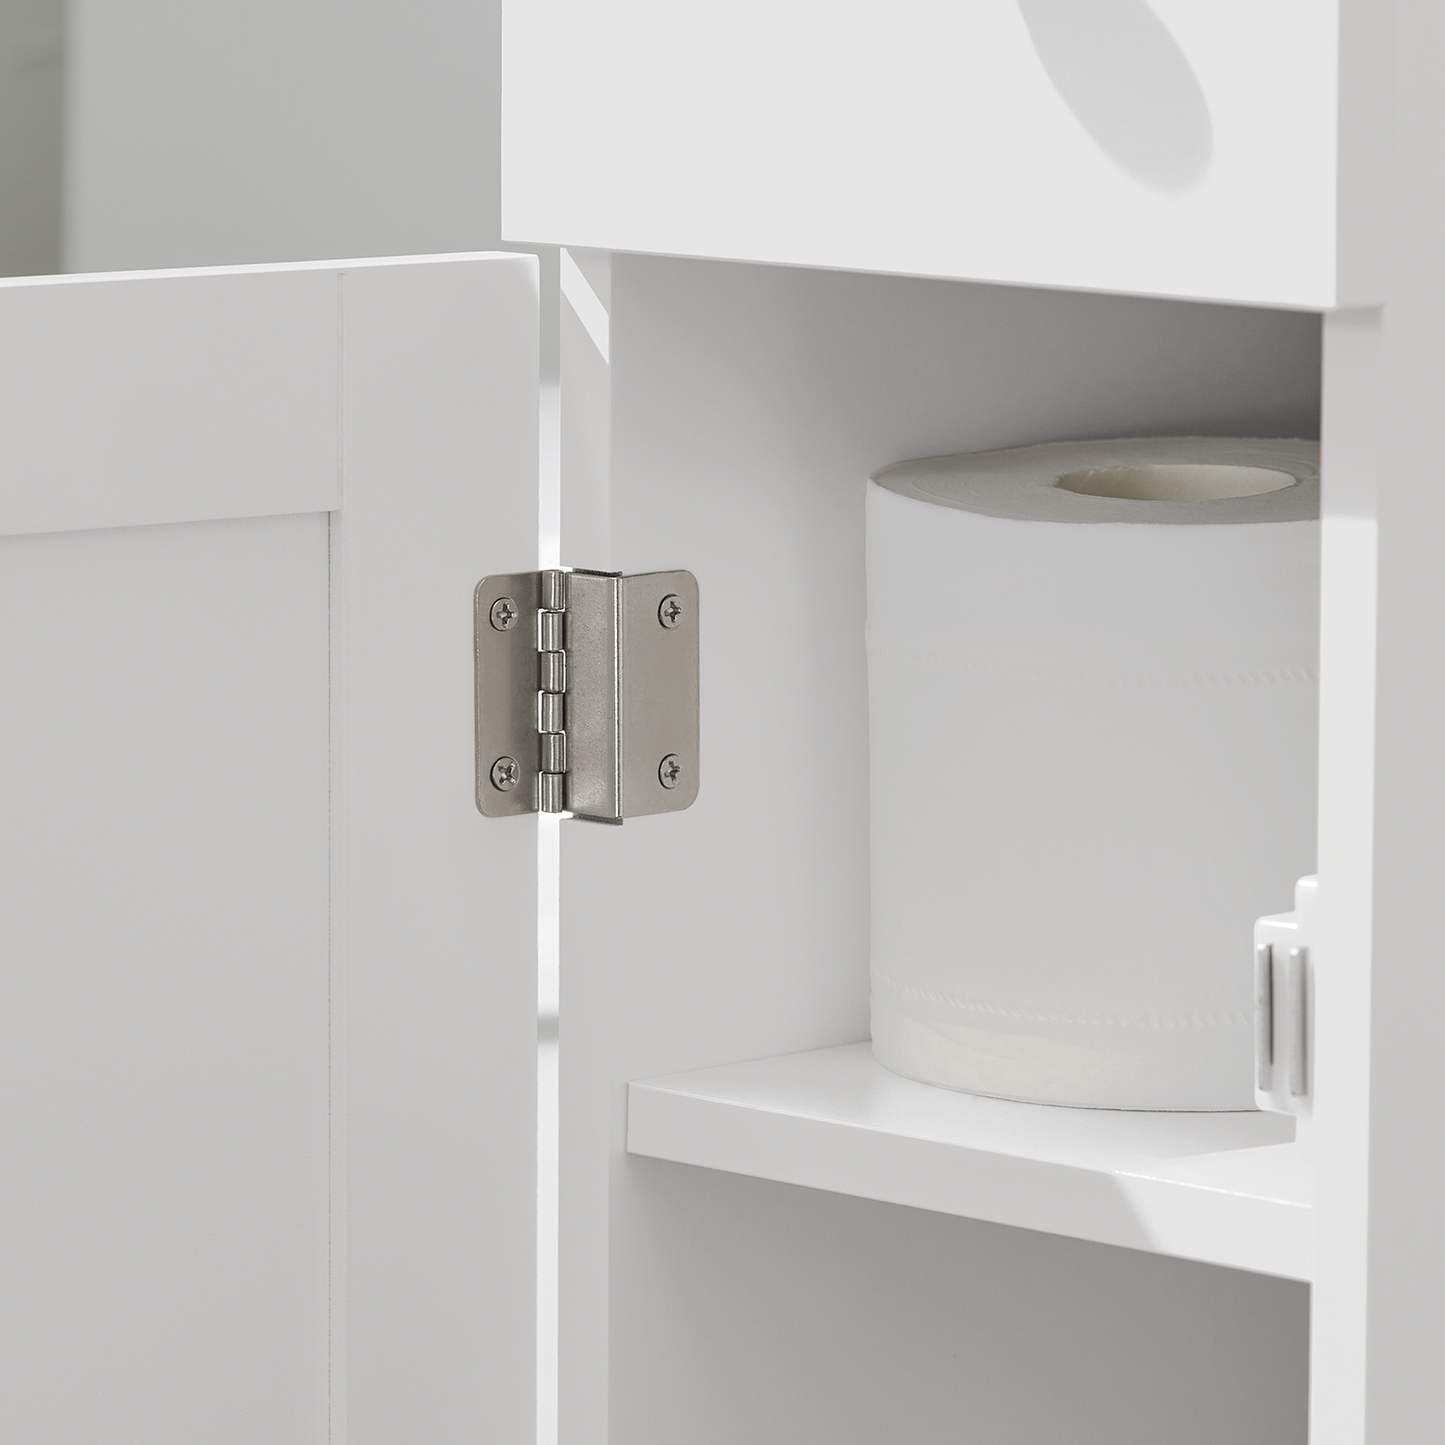 SoBuy Bathroom Cabinet Storage Cabinet Bathroom Toilet Paper Roll Holder